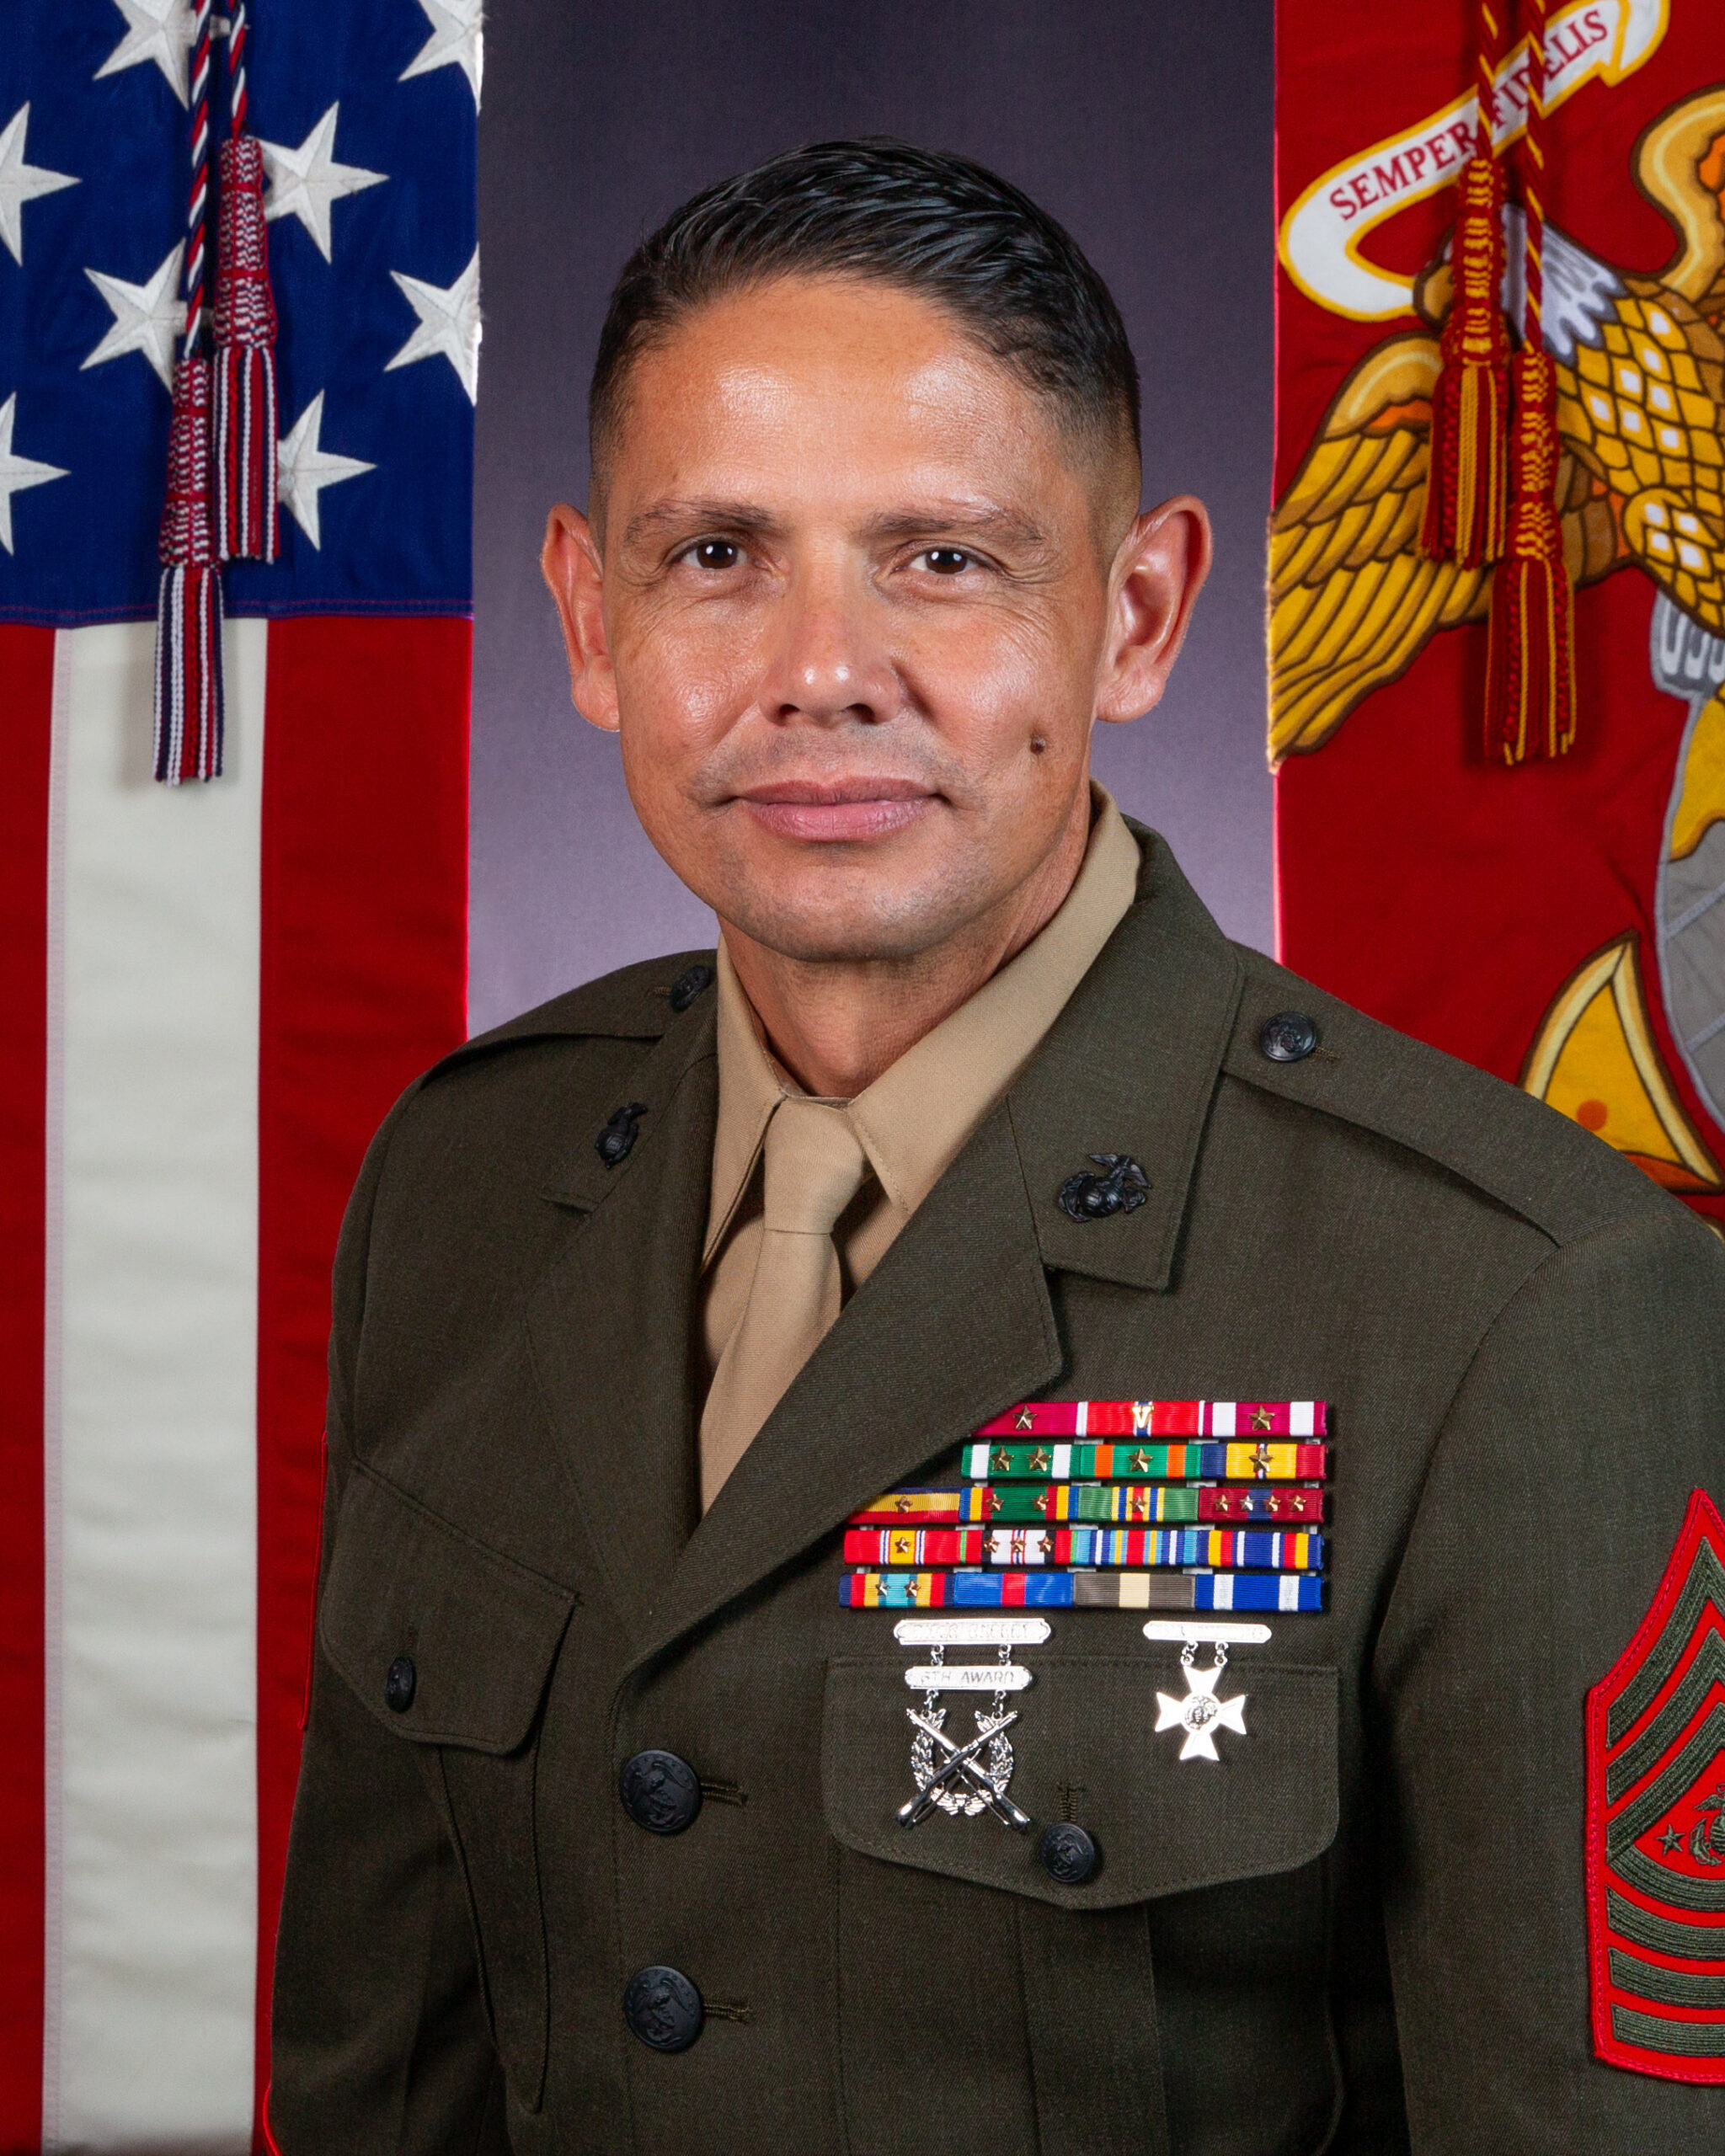 Sergeant Major Ruiz Sergeant Major of the Marine Corps